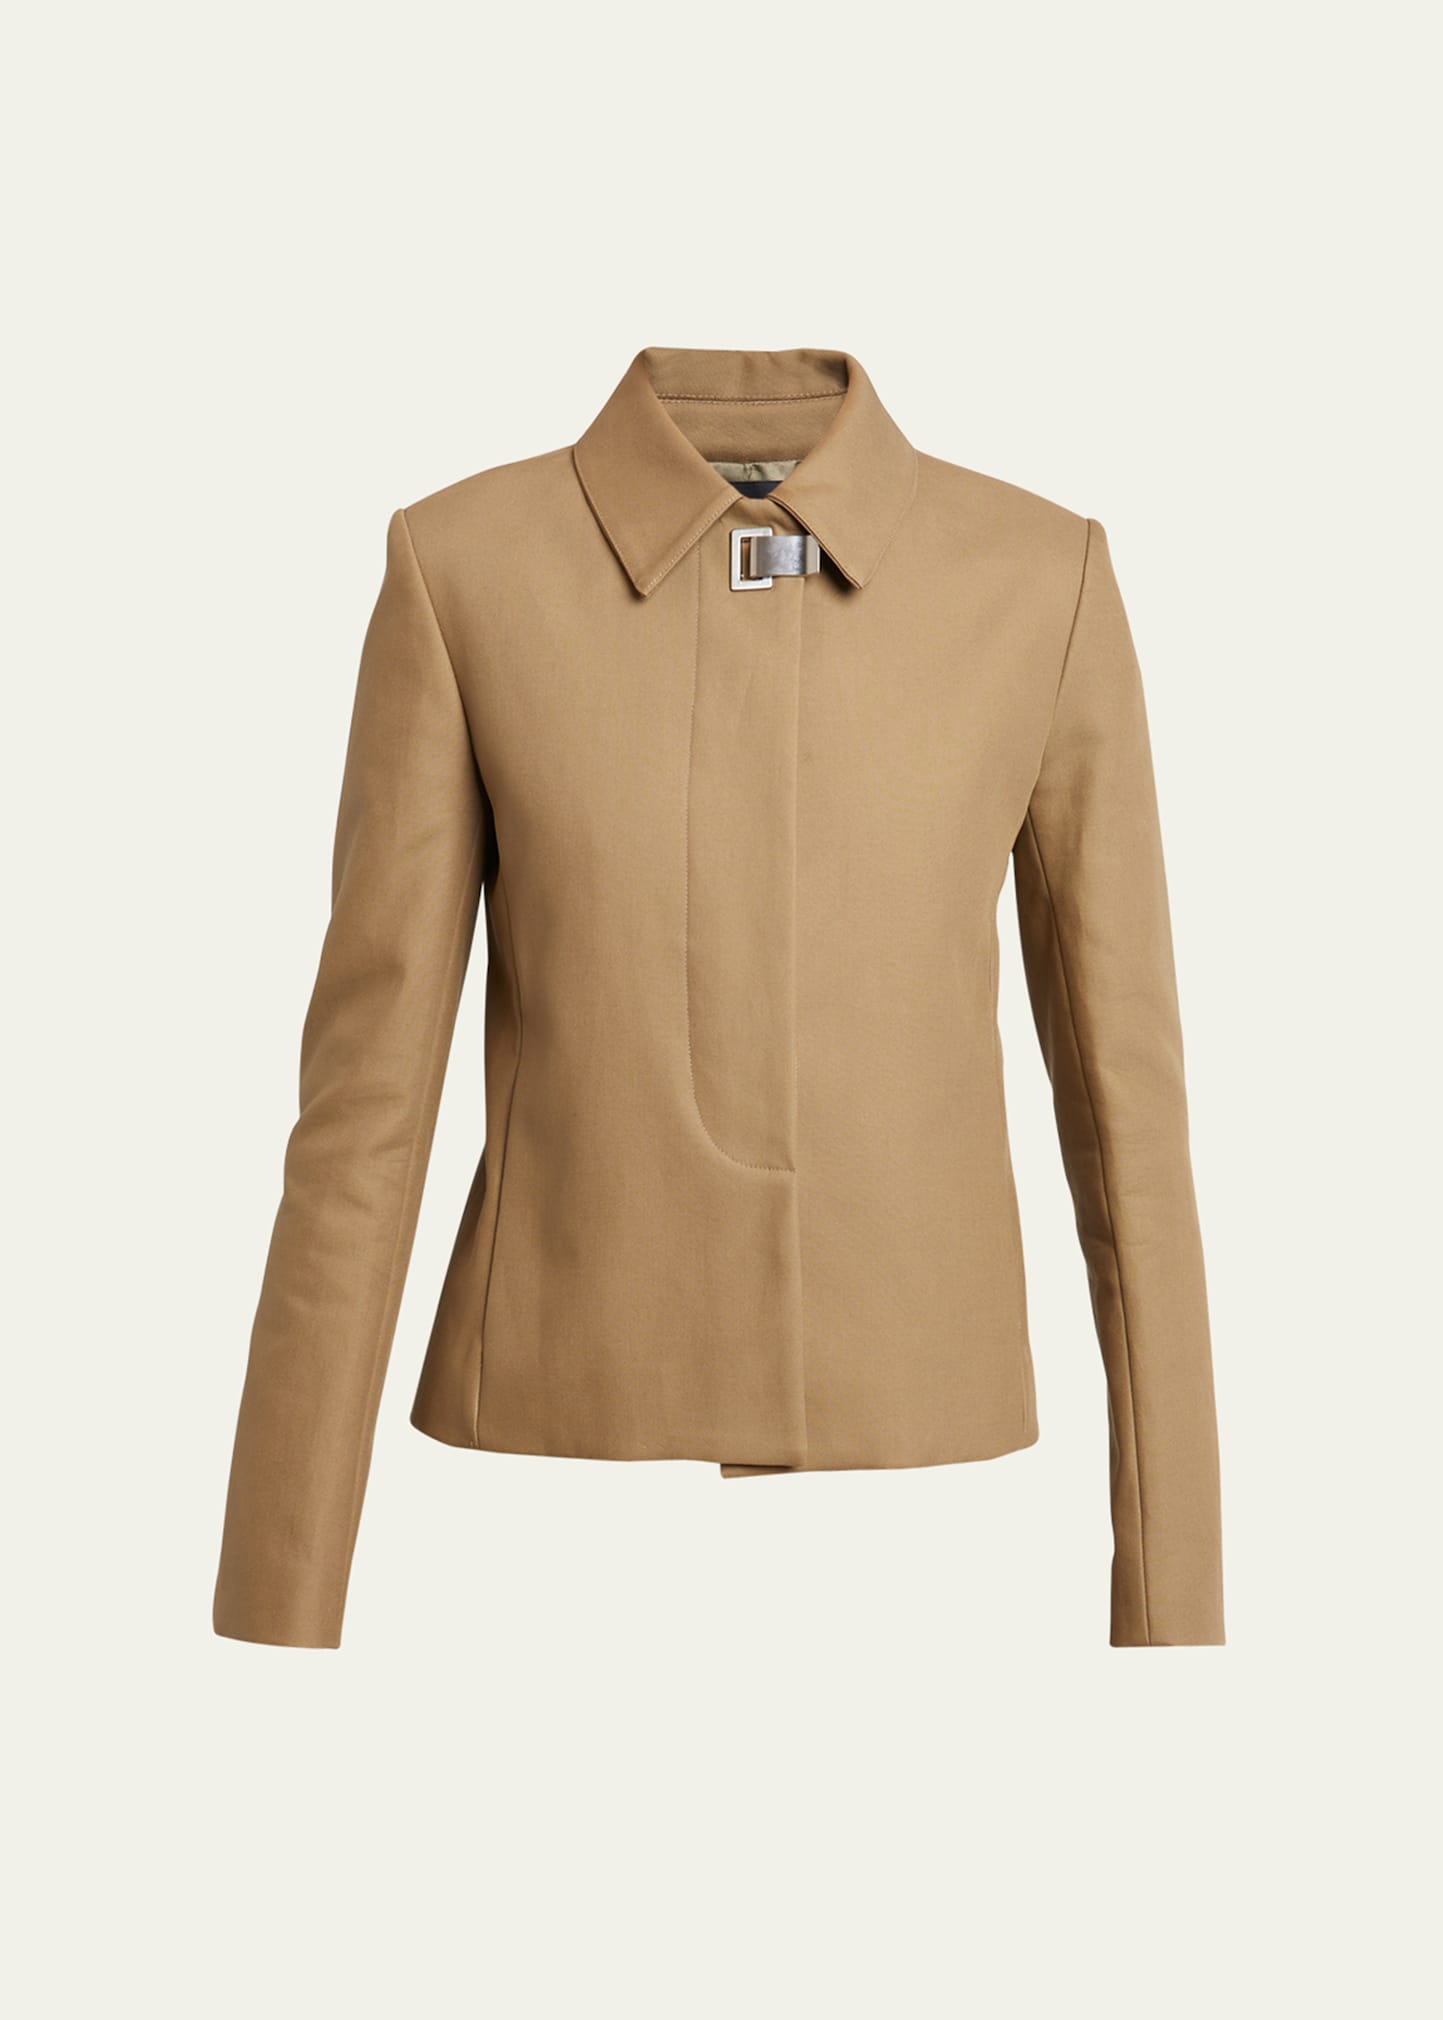 Proenza Schouler Lana Eco Cotton Twill Jacket In Drab